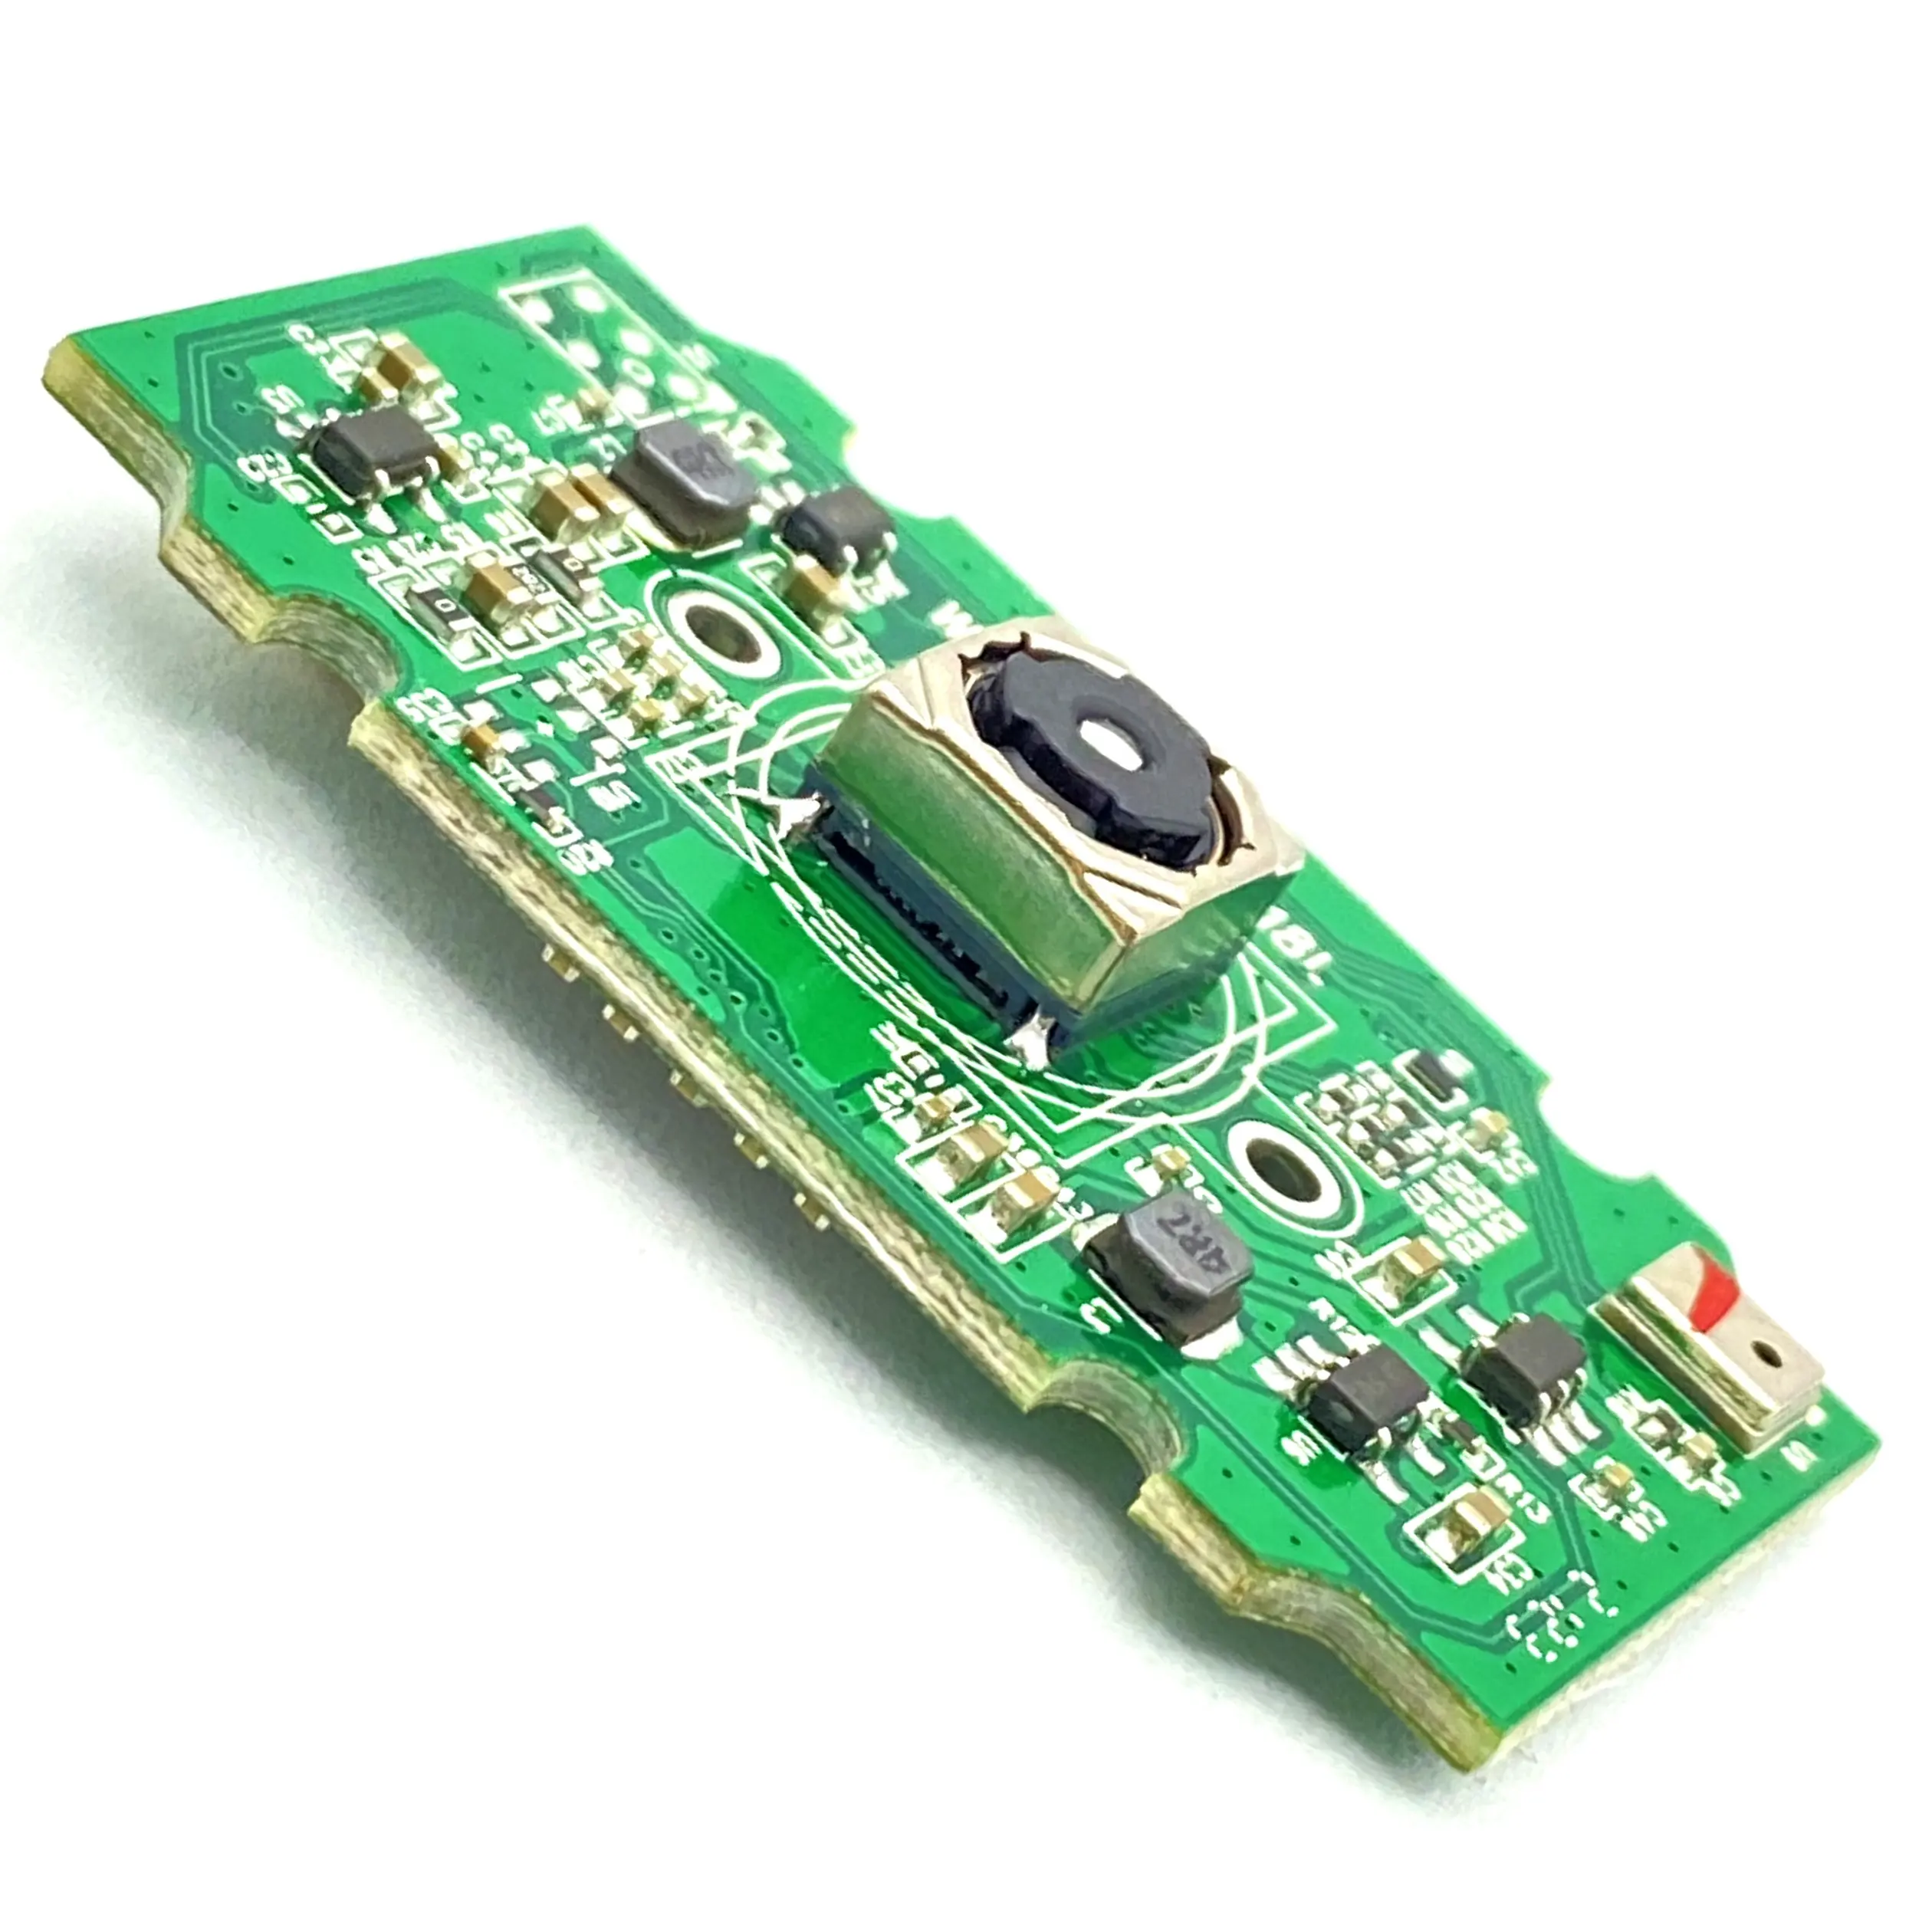 Hd 12MP USB-cameramodule met IMX258-sensor autofocus digitale microfoon CE FCC RoSH Machine Vision-fabrikant geleverd